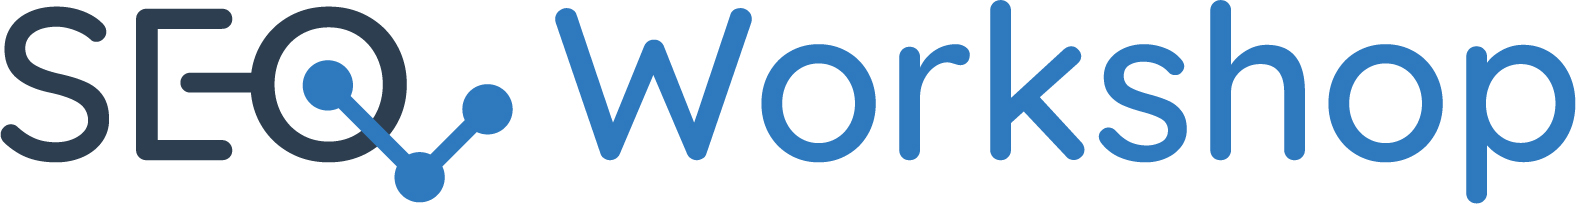 SEO Workshop logo